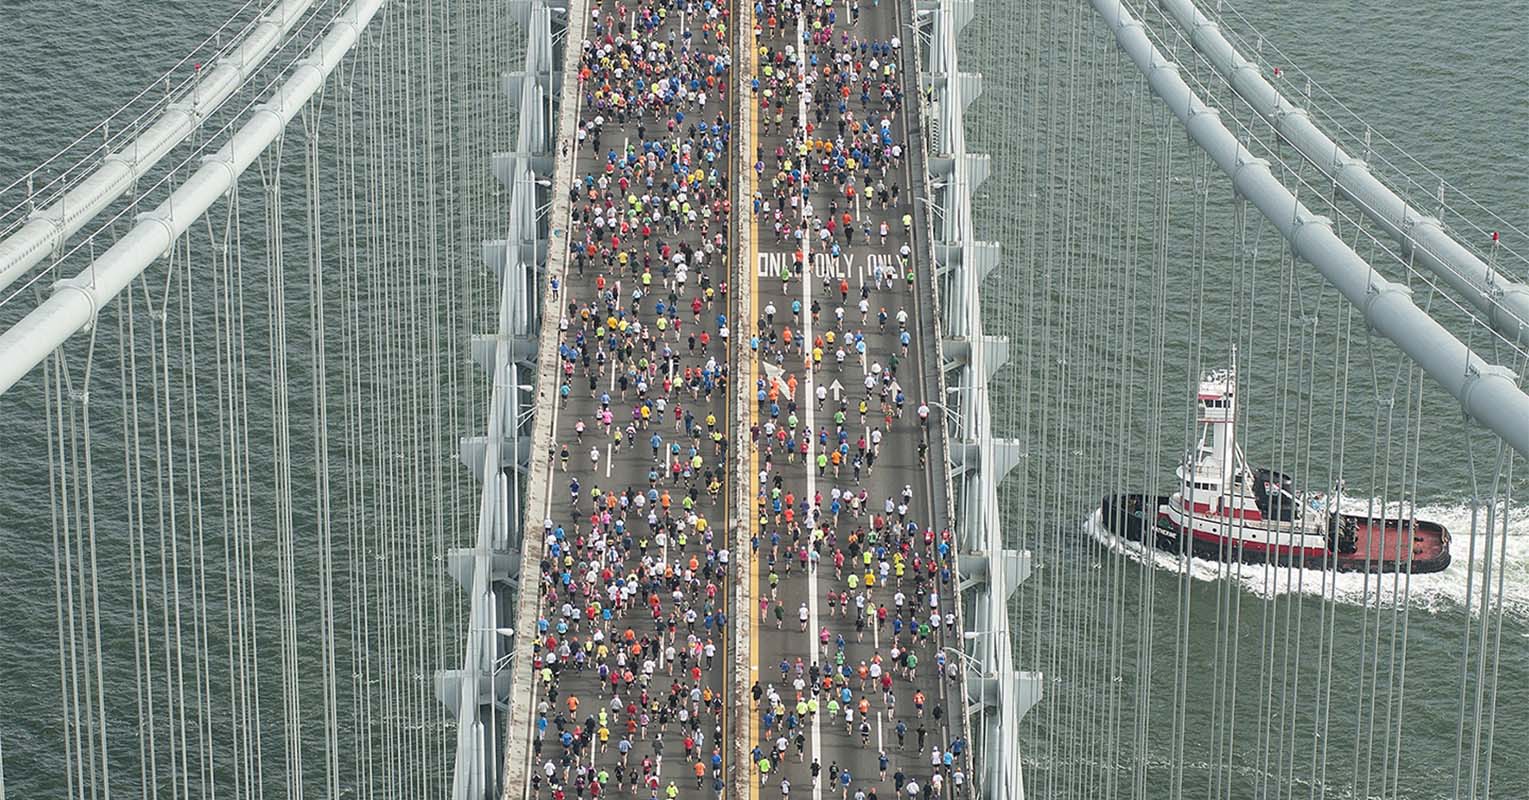 How Many Miles Is The NYC Marathon